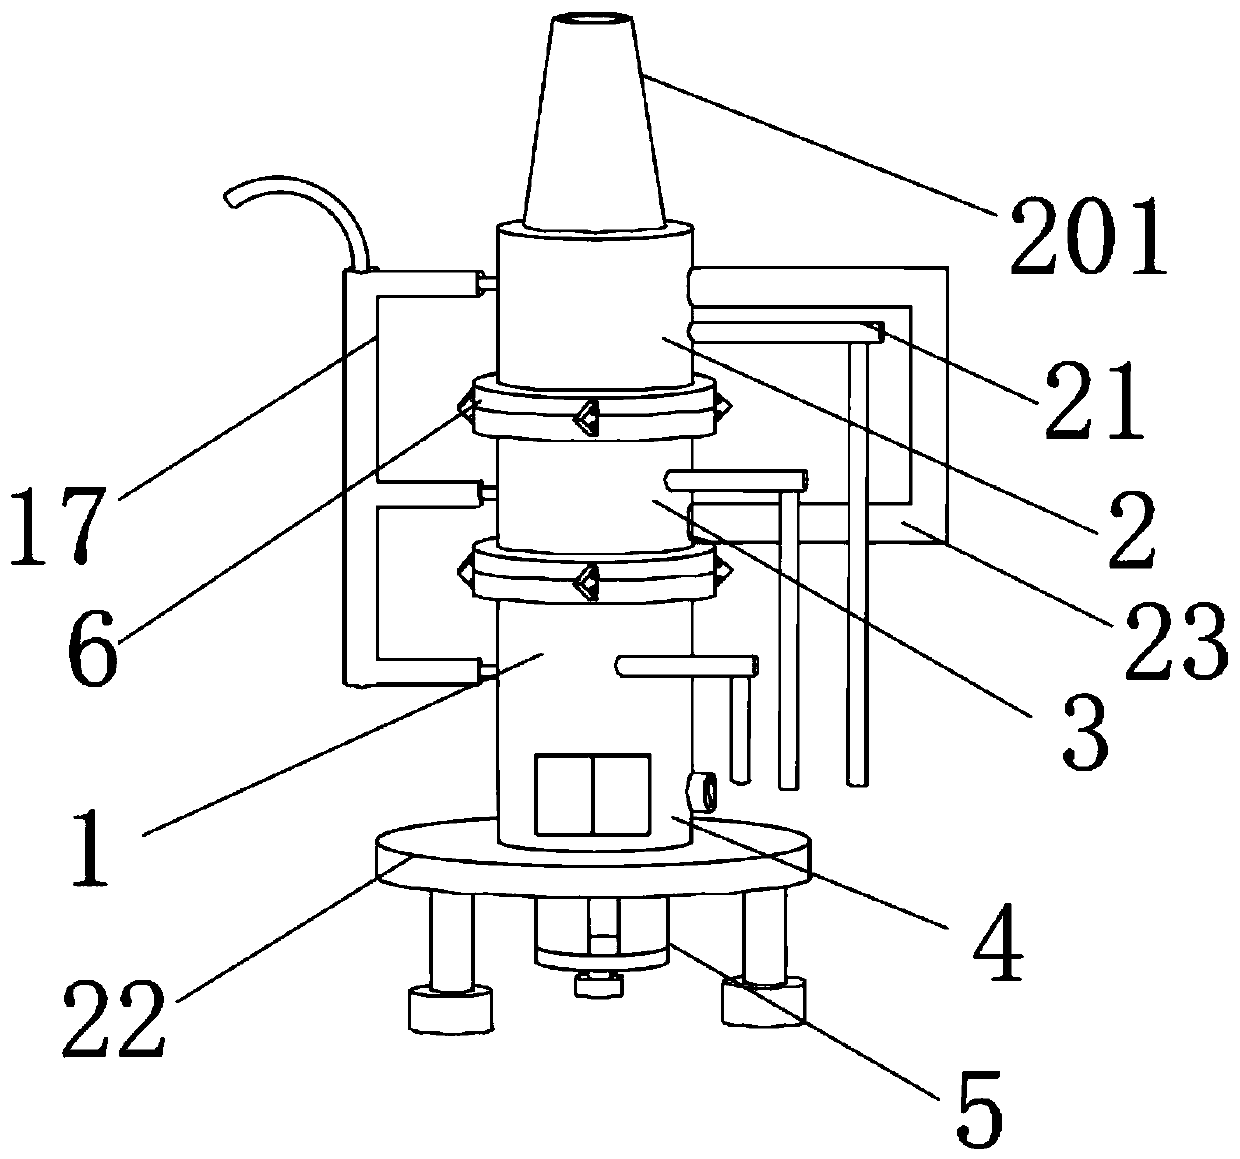 Central-suction type vaporization furnace